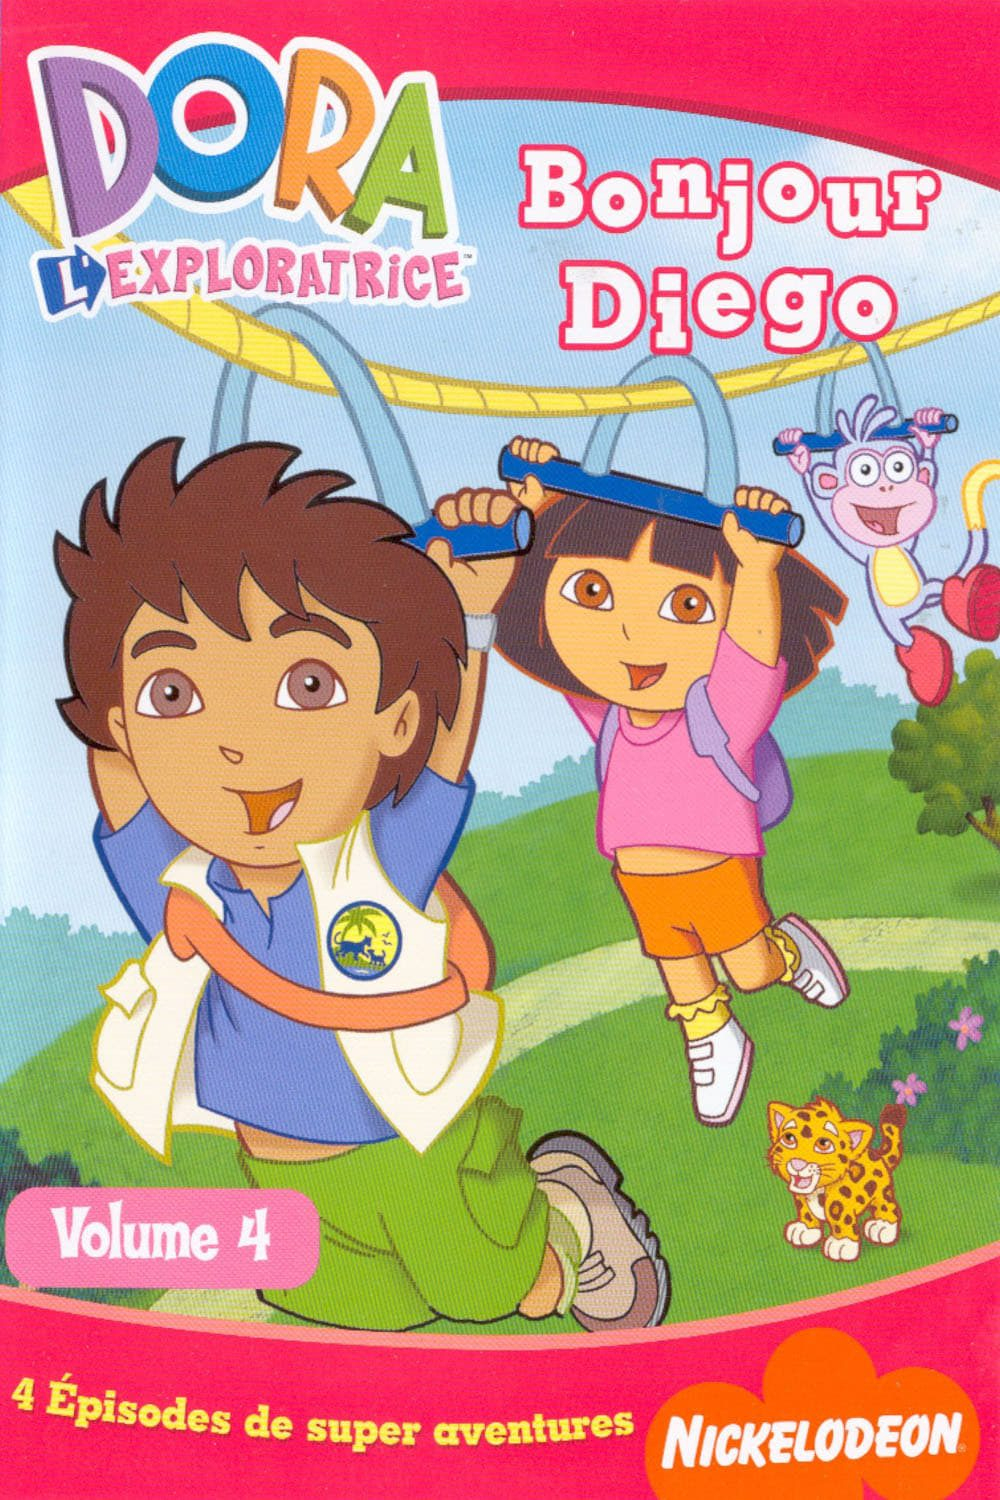 Dora L'Exploratrice - Volume 04 - Bonjour Diego Dutch concernant Dora Exploratrice